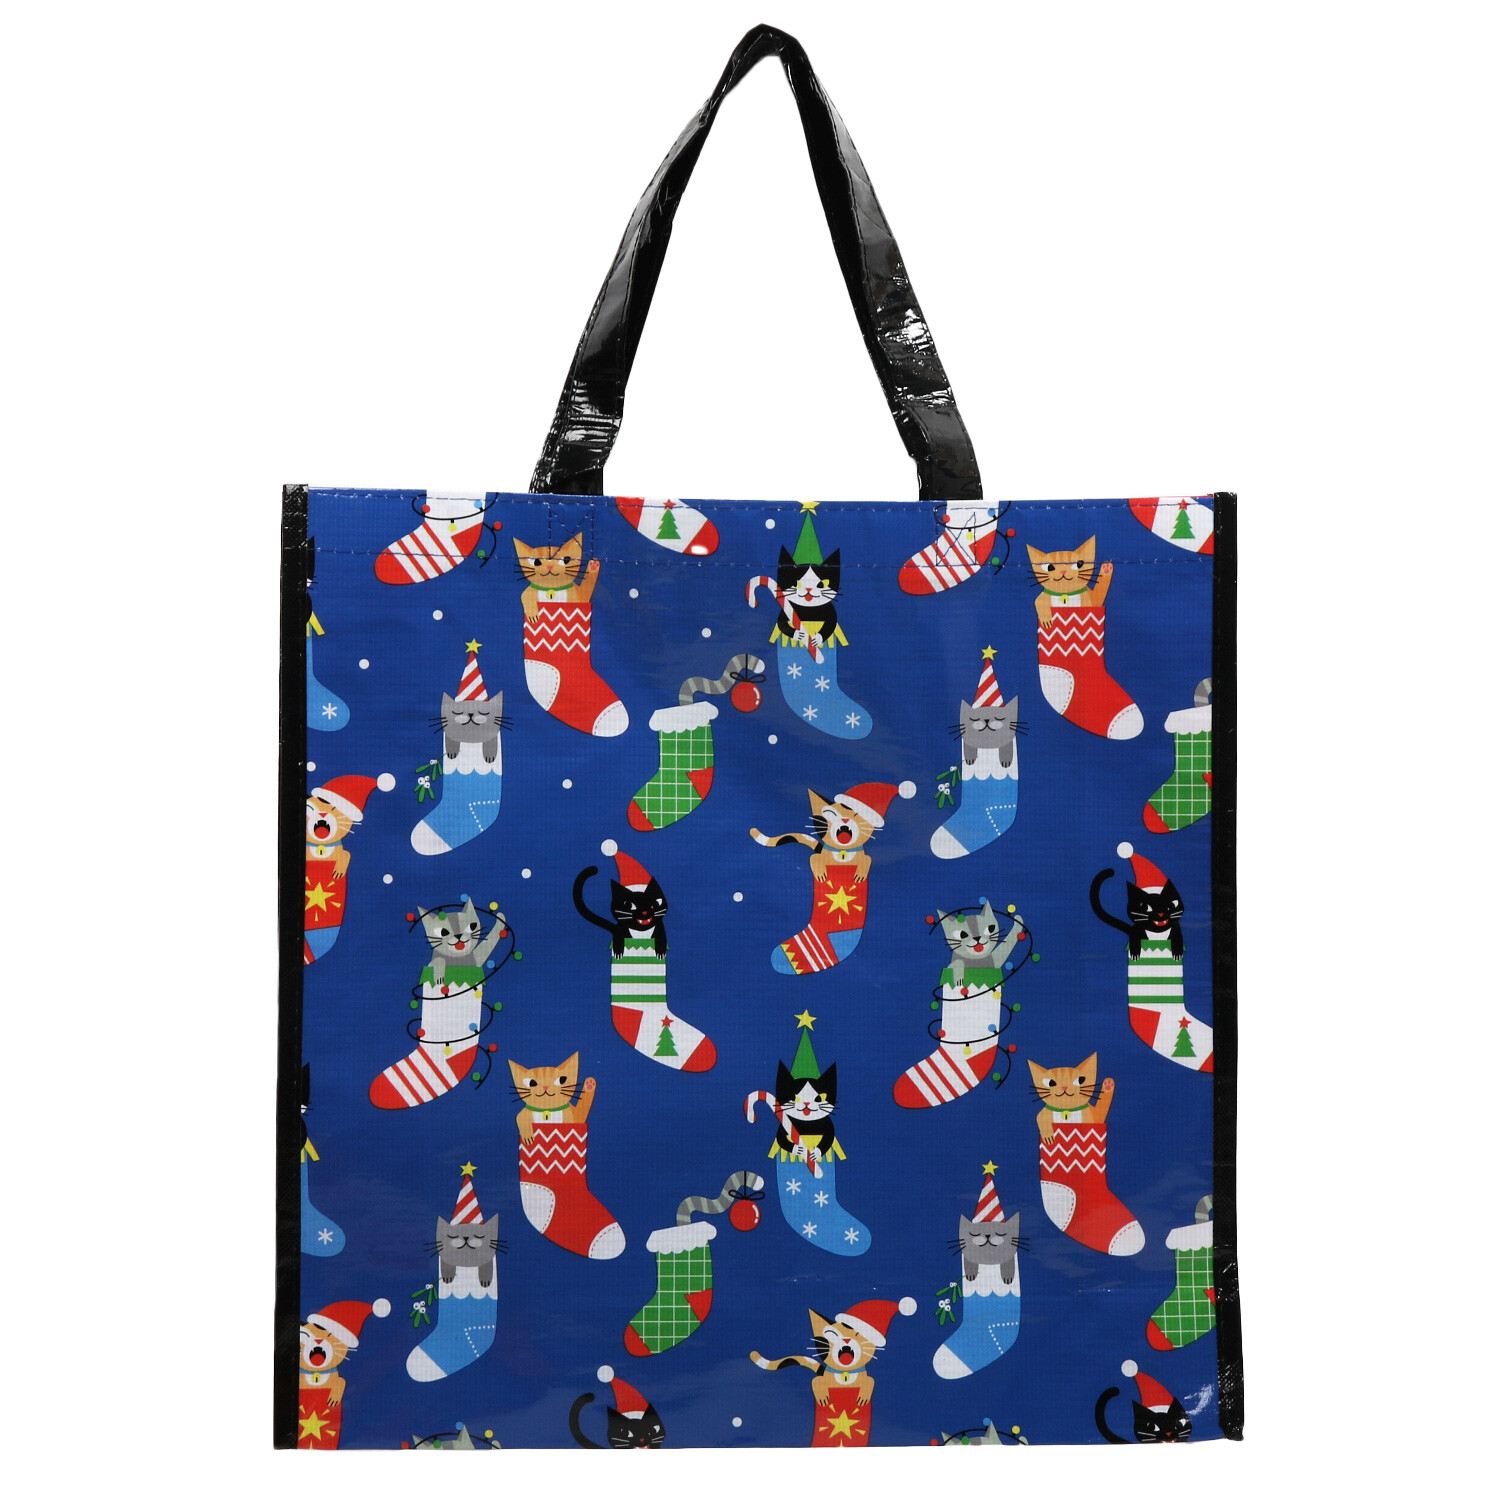 Festive Animal Shopper Bag - Blue Image